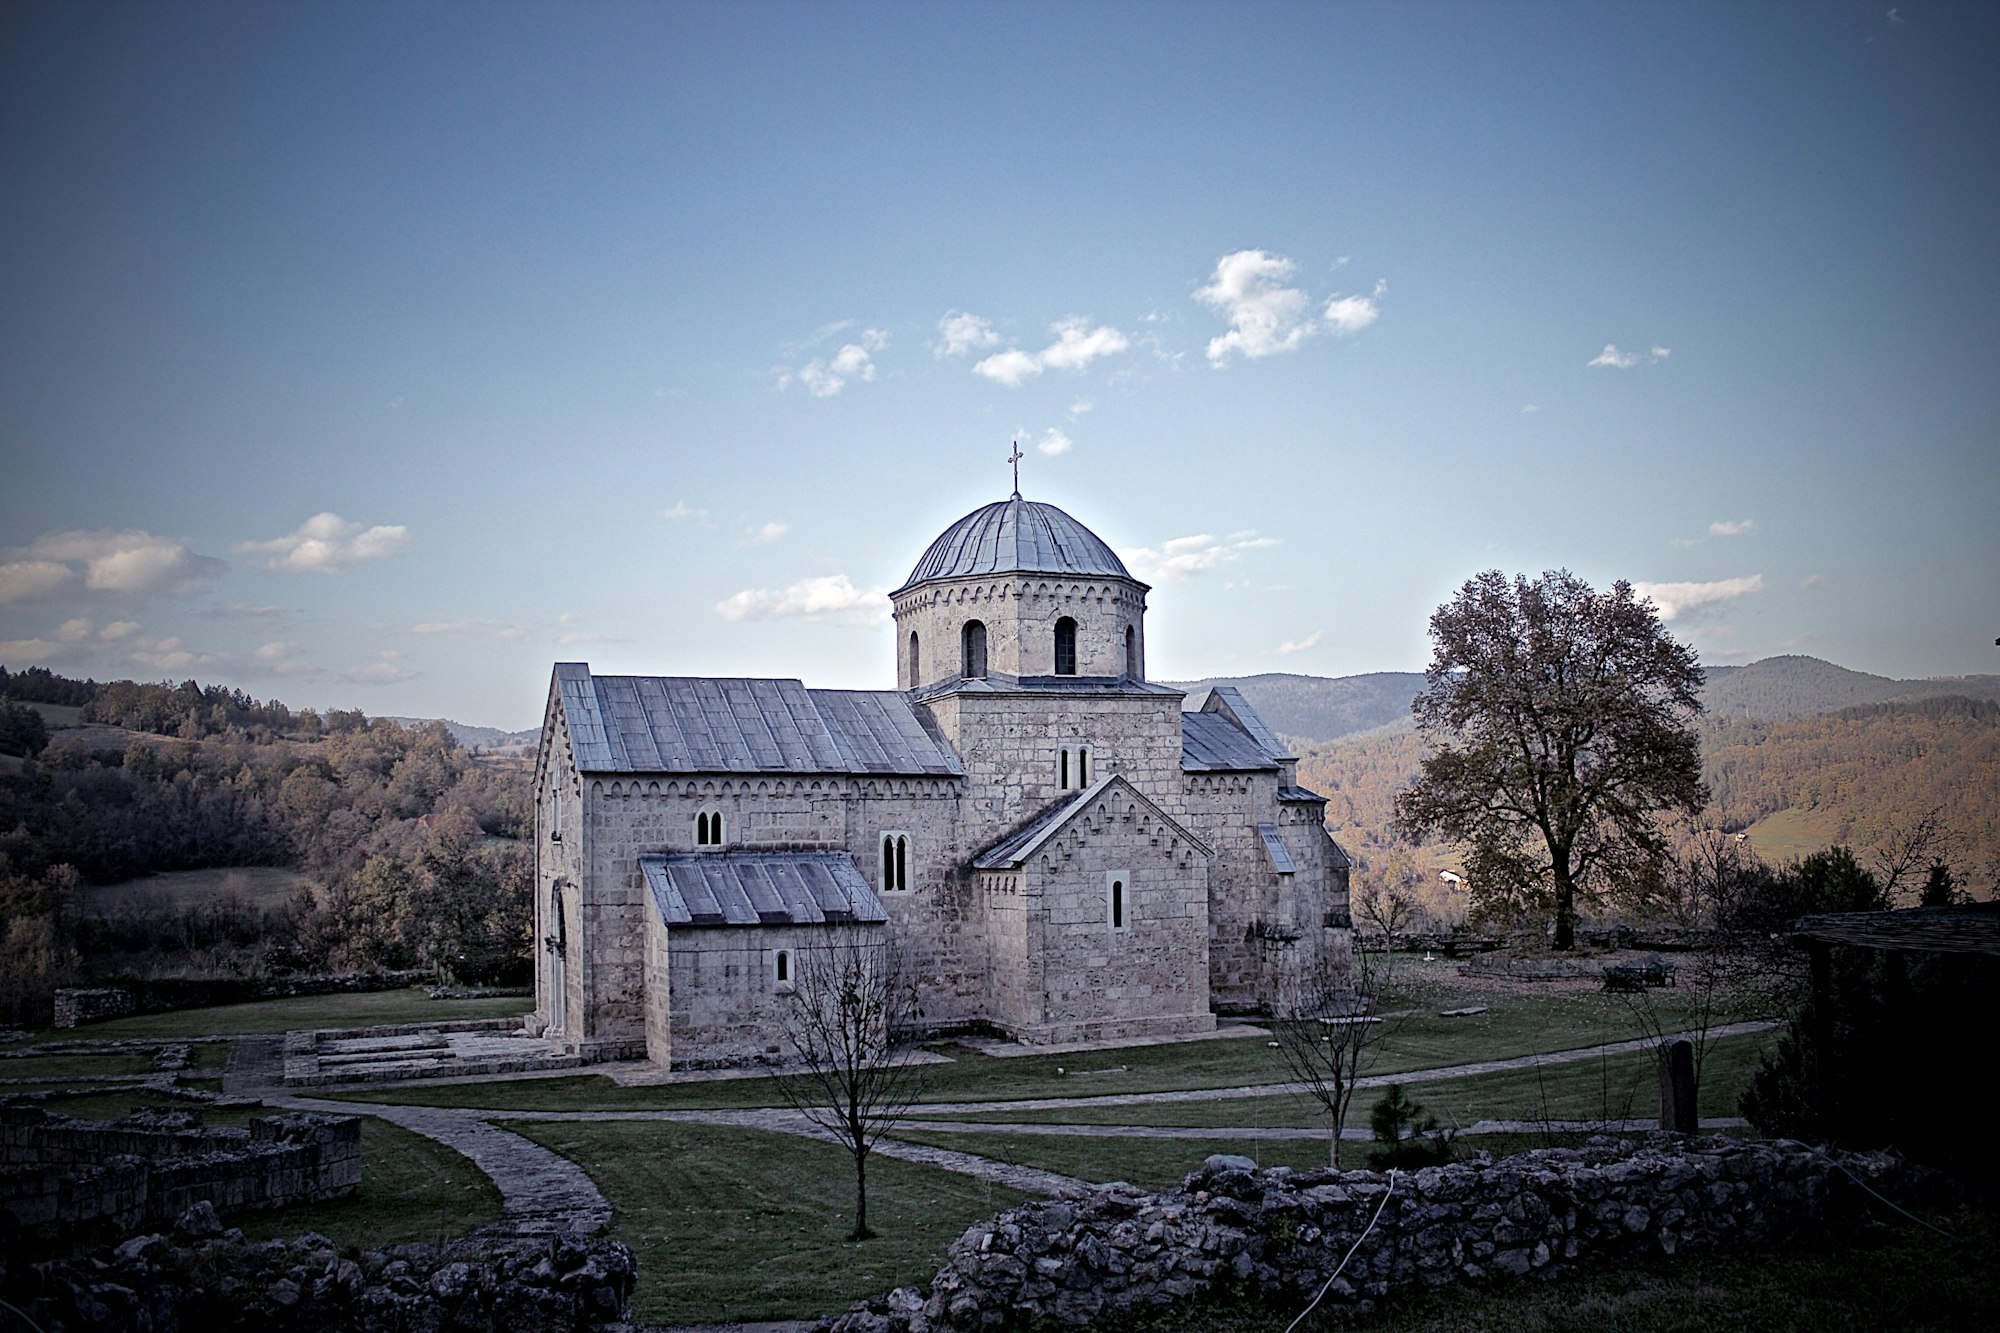 Serbian Orthodox monastery of Gradac (13th century), Serbia